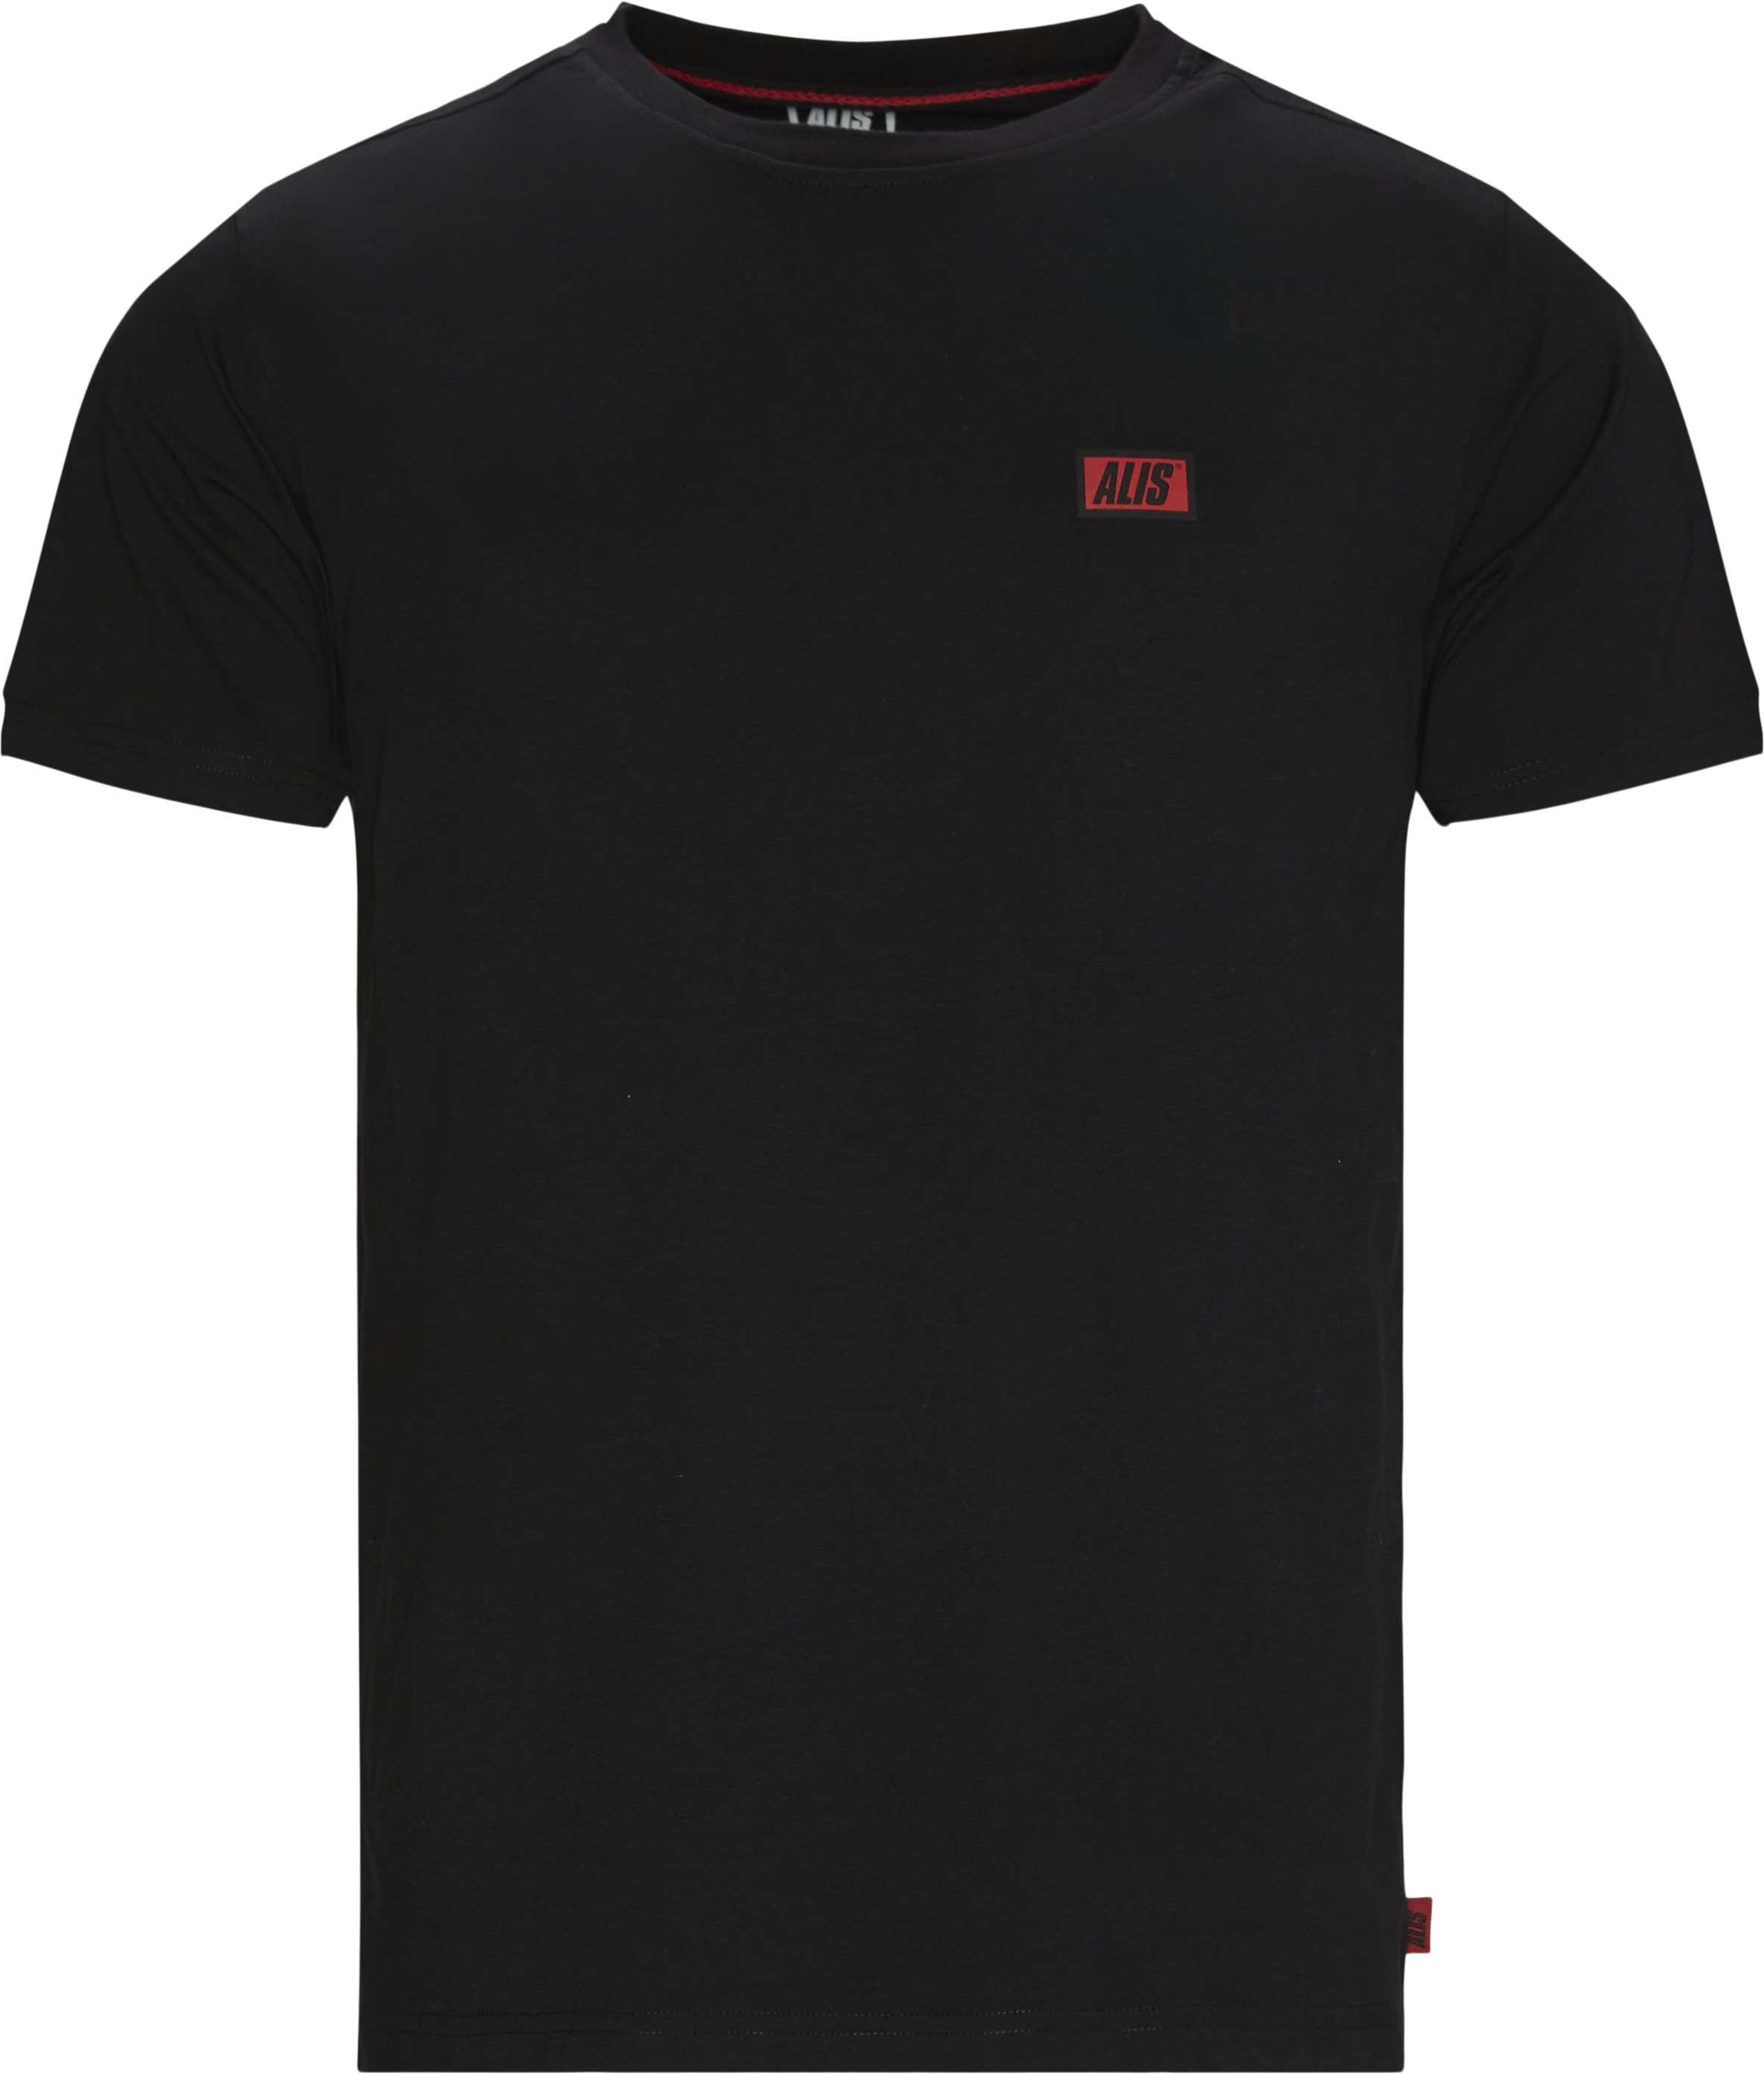 Am3001 Tee - T-shirts - Regular fit - Black